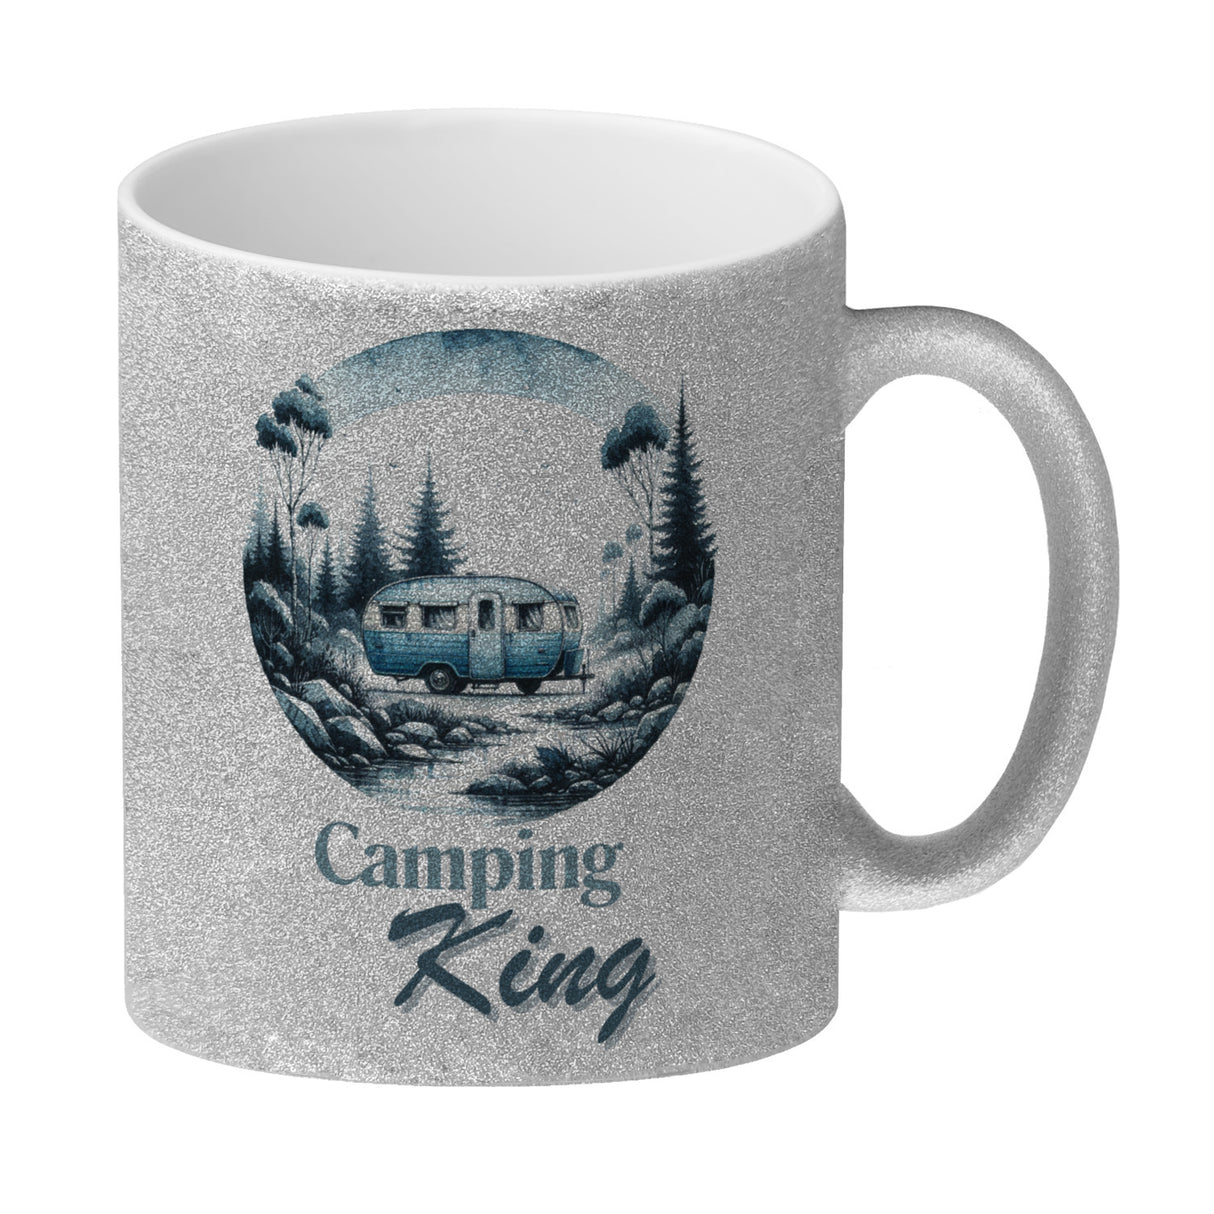 Camping King Wohnwagen Kaffeebecher